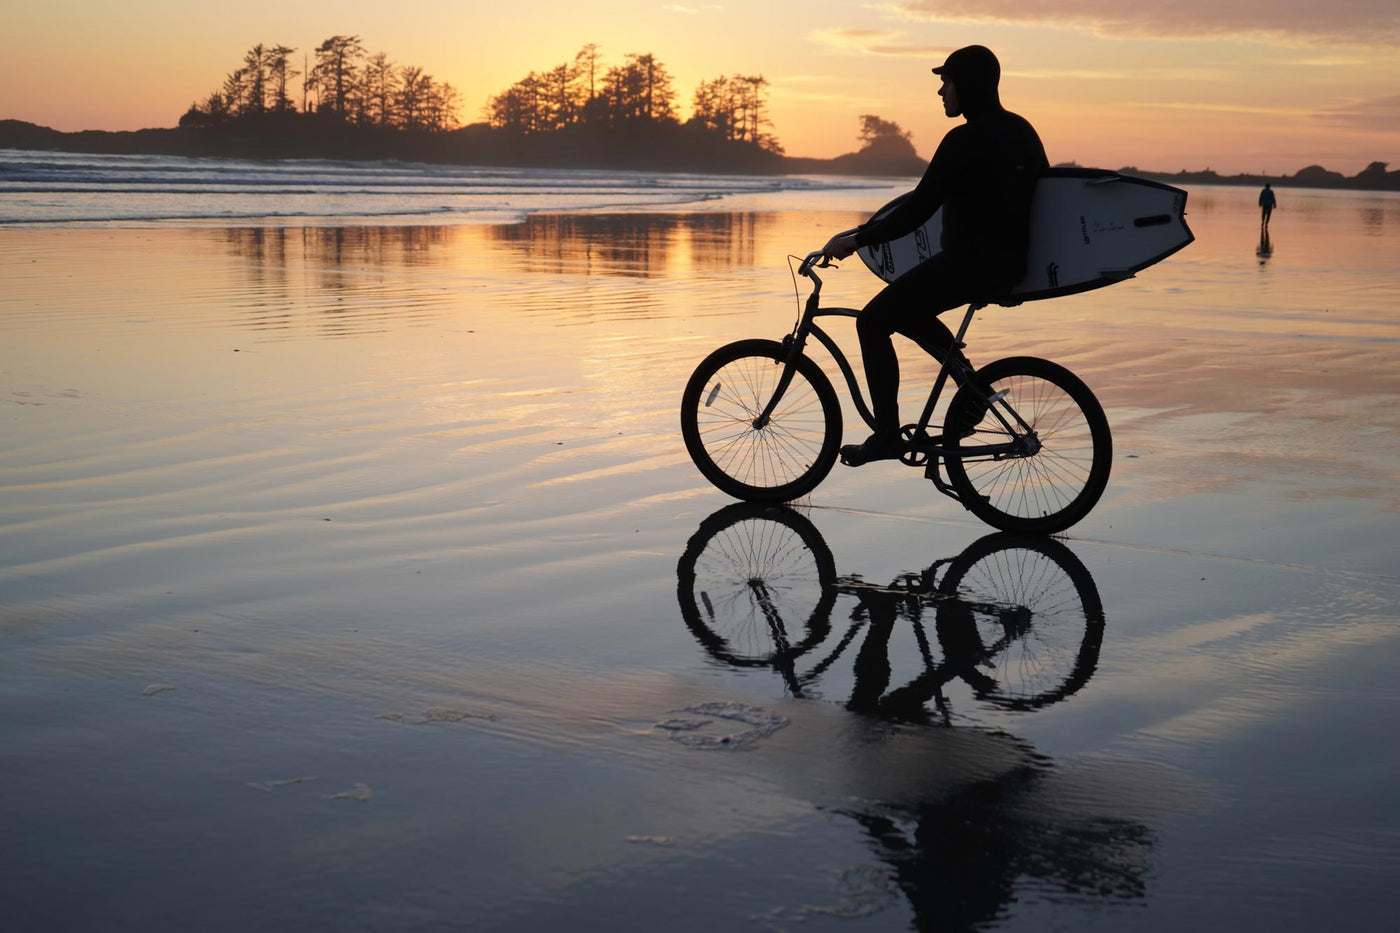 surfer on a belt drive cypre bikes beach cruiser at sunset